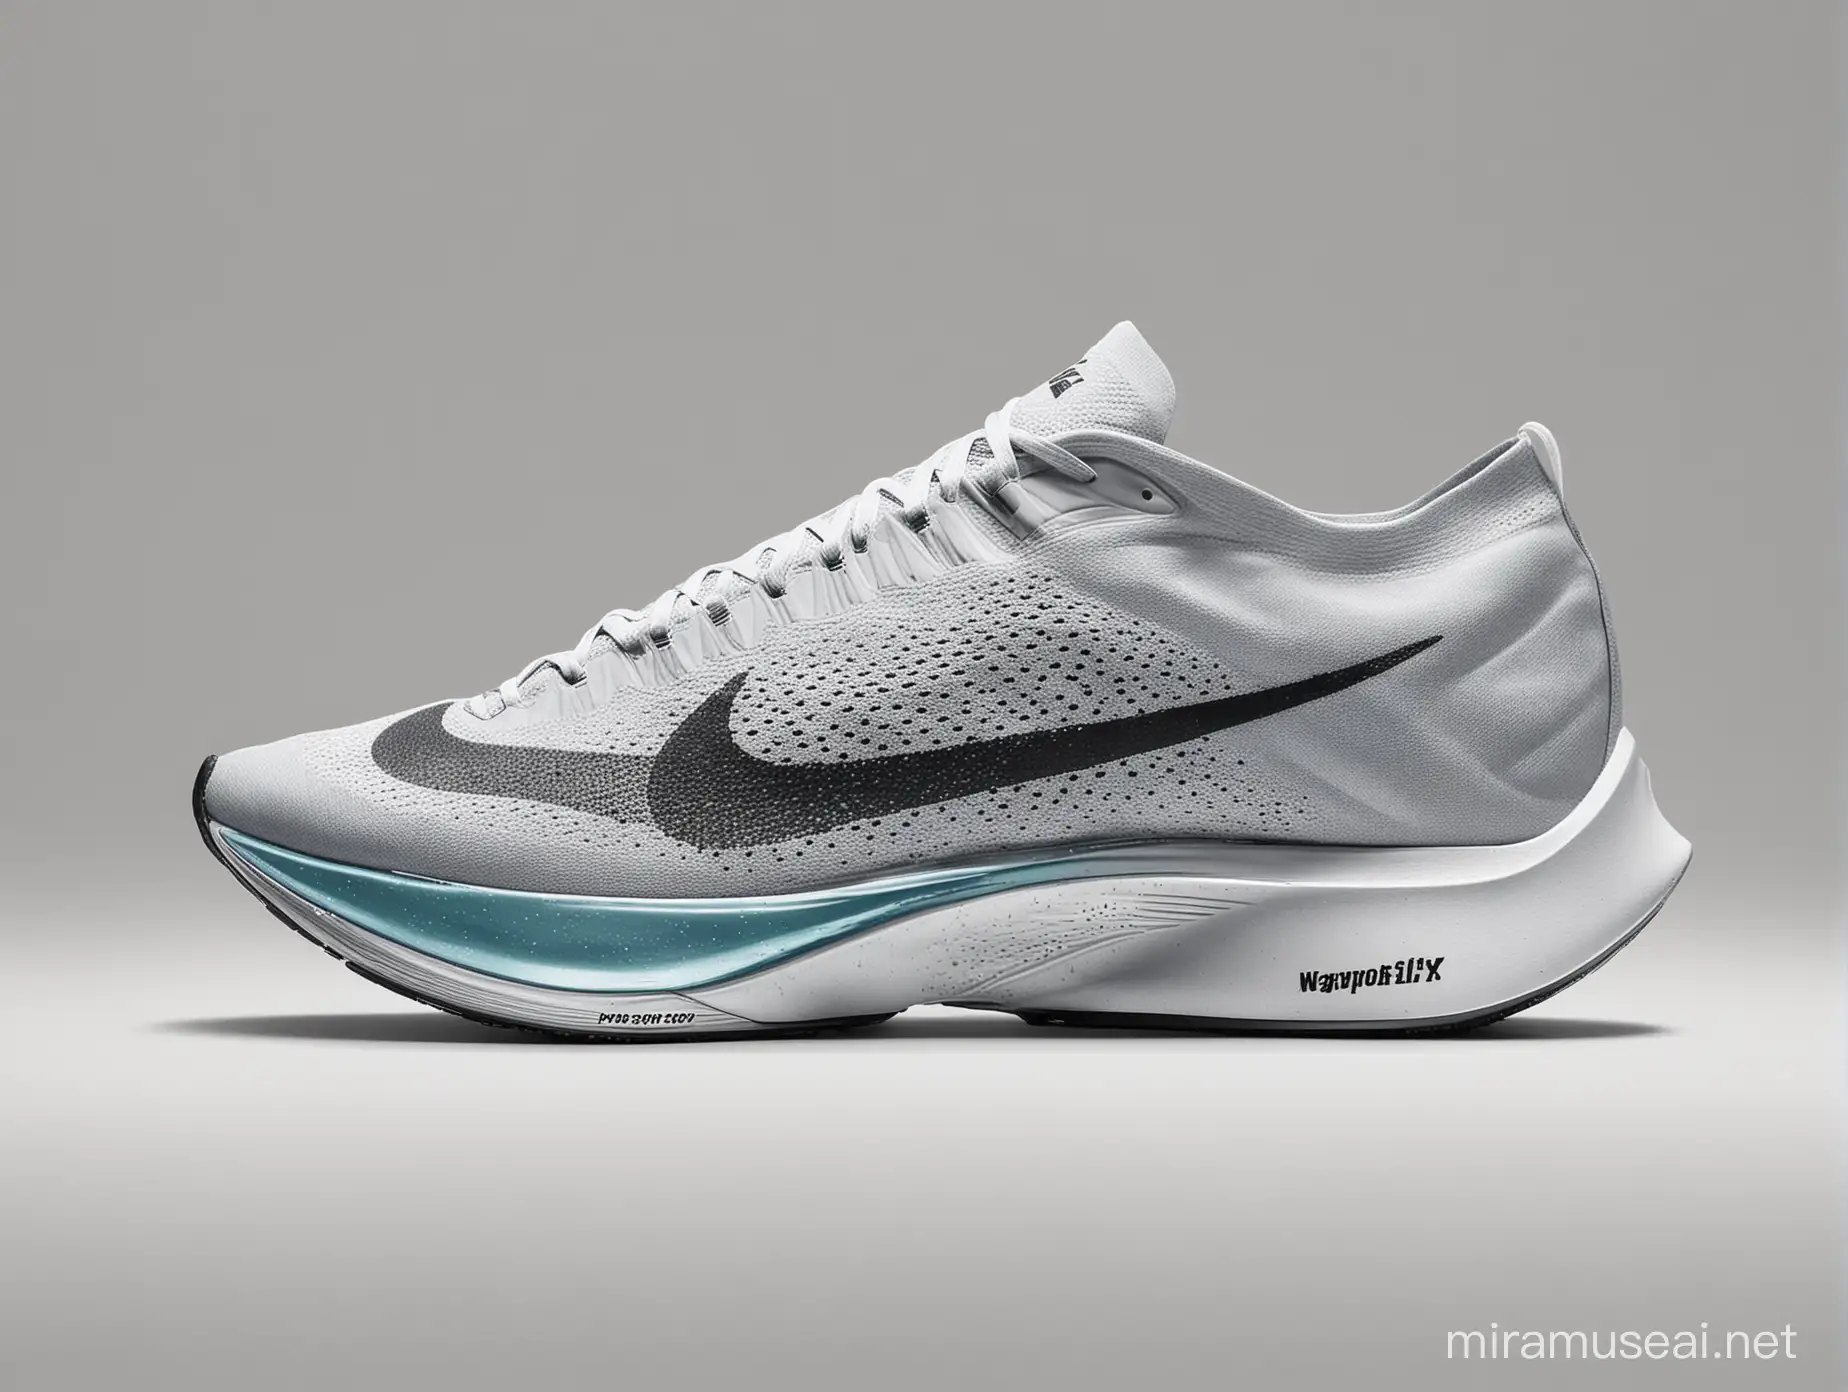 Nike VaporFly 4 Running Shoes on Light Grey Background